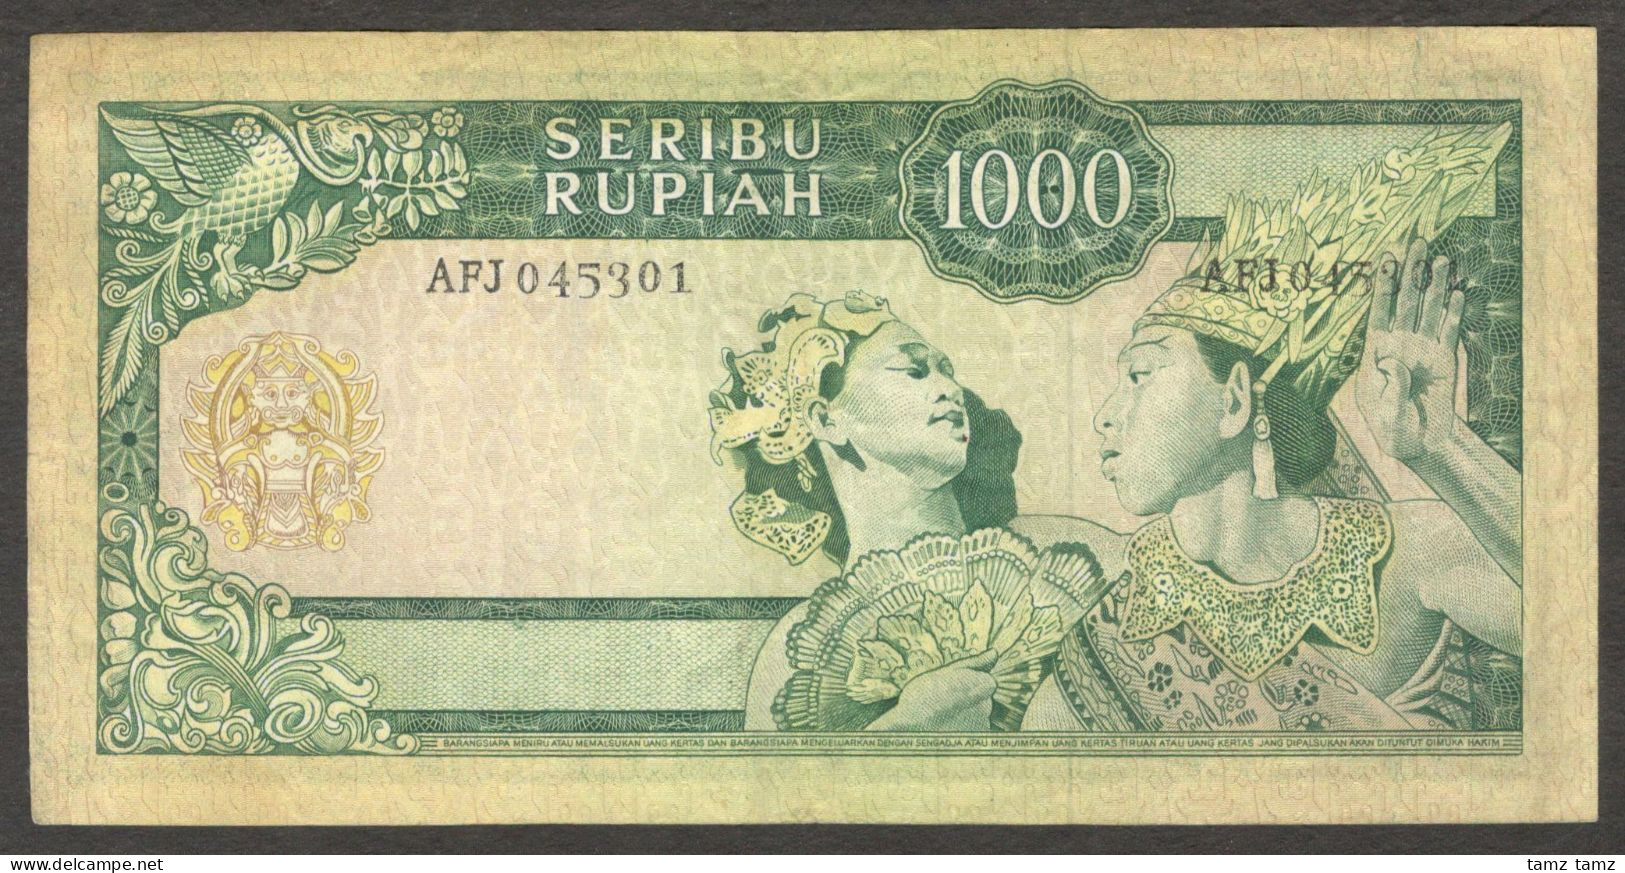 Indonesia 1000 1,000 Rupiah President Soekarno P-88b 1960 Ch VF Double WMK - Indonesia